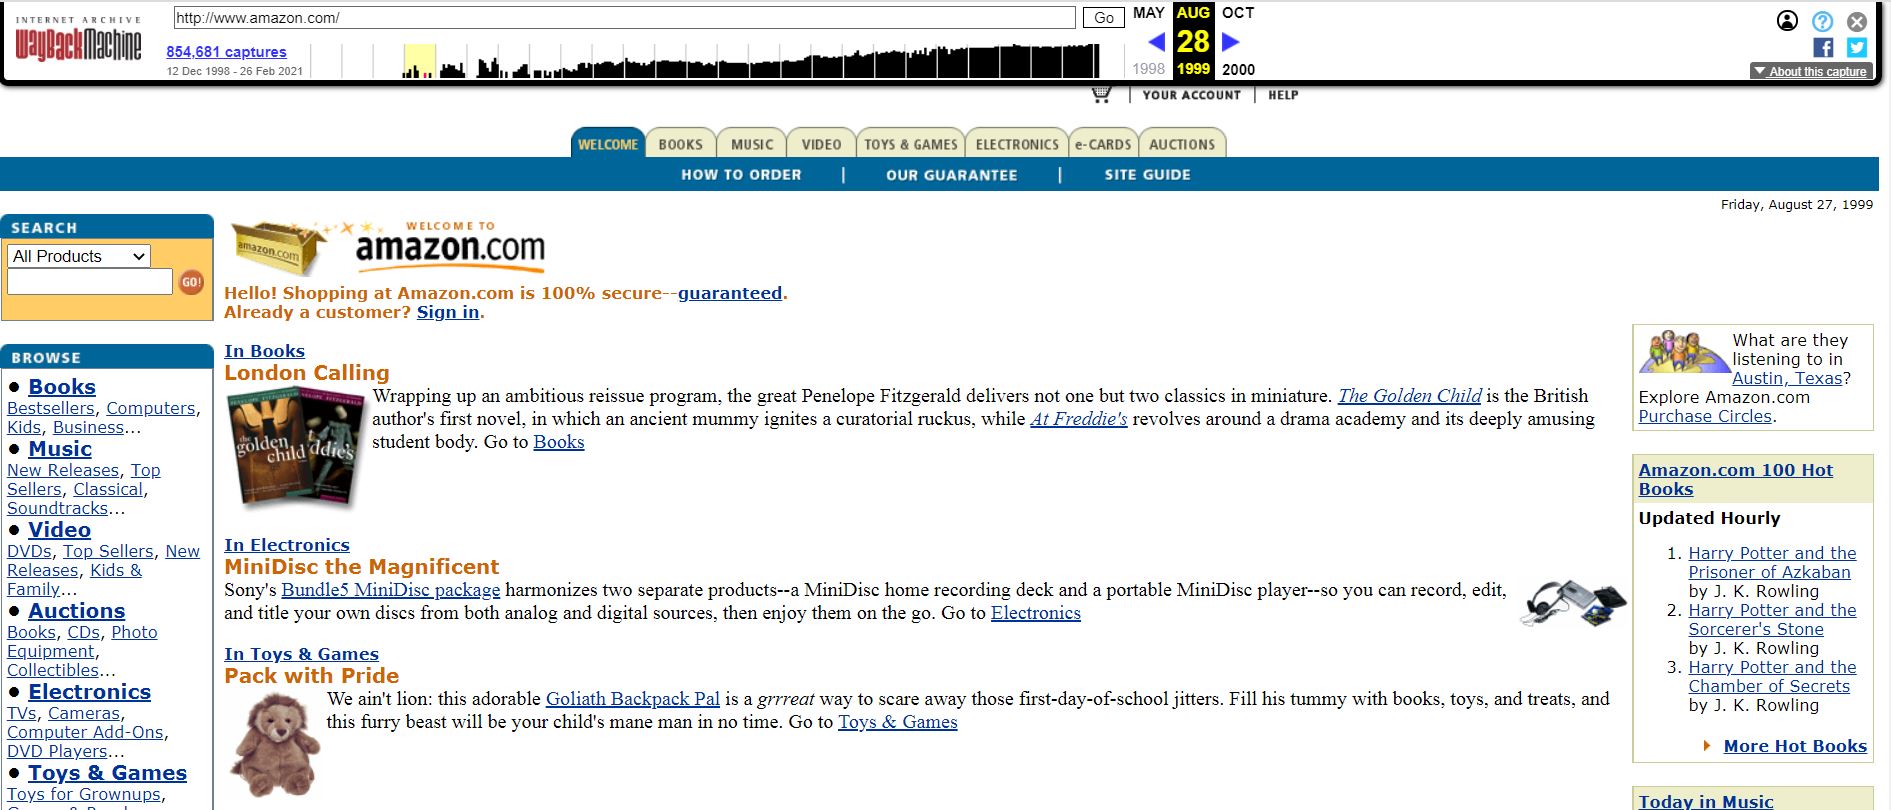 Check Website History - Amazon Homepage 1999